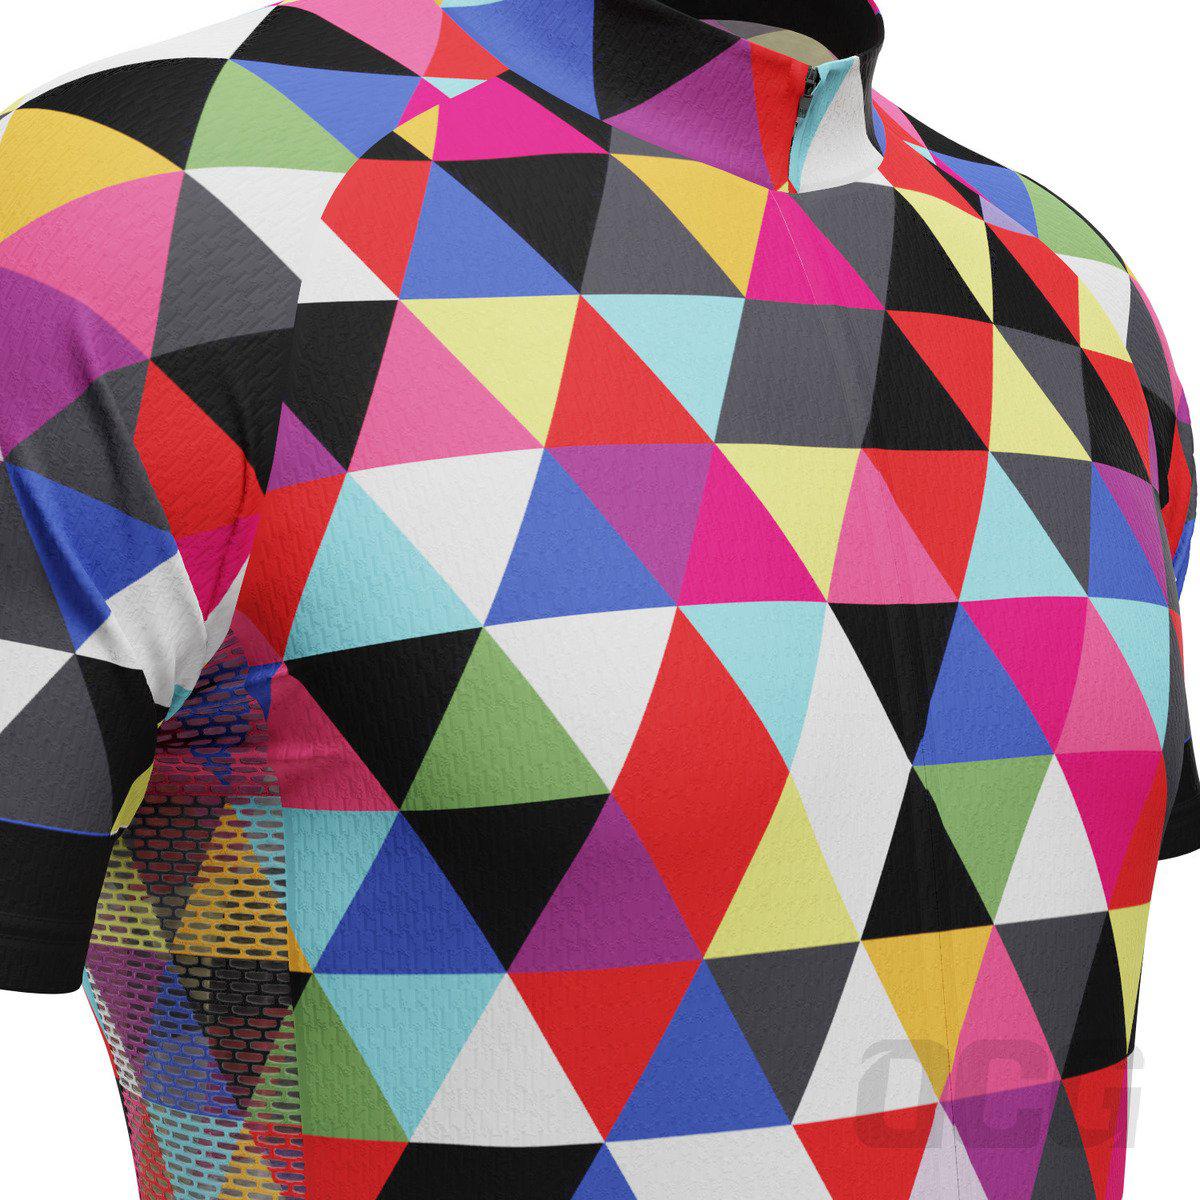 Men's High Viz Color Triangles Pro-Band Cycling Kit